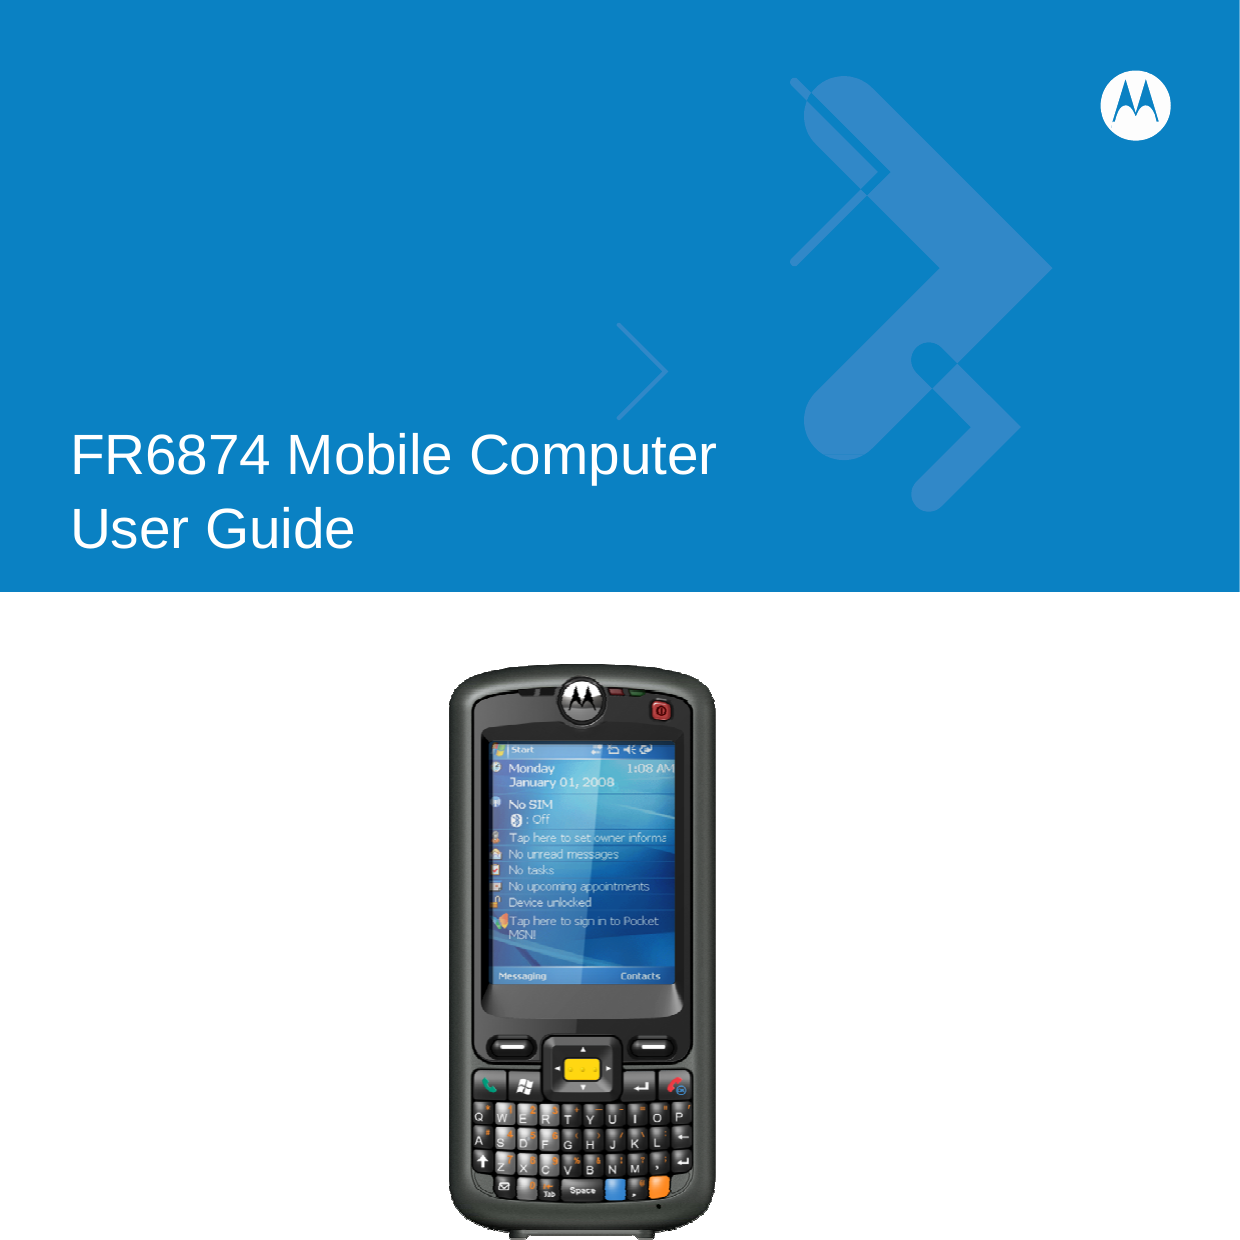              FR6874 Mobile Computer   User Guide        